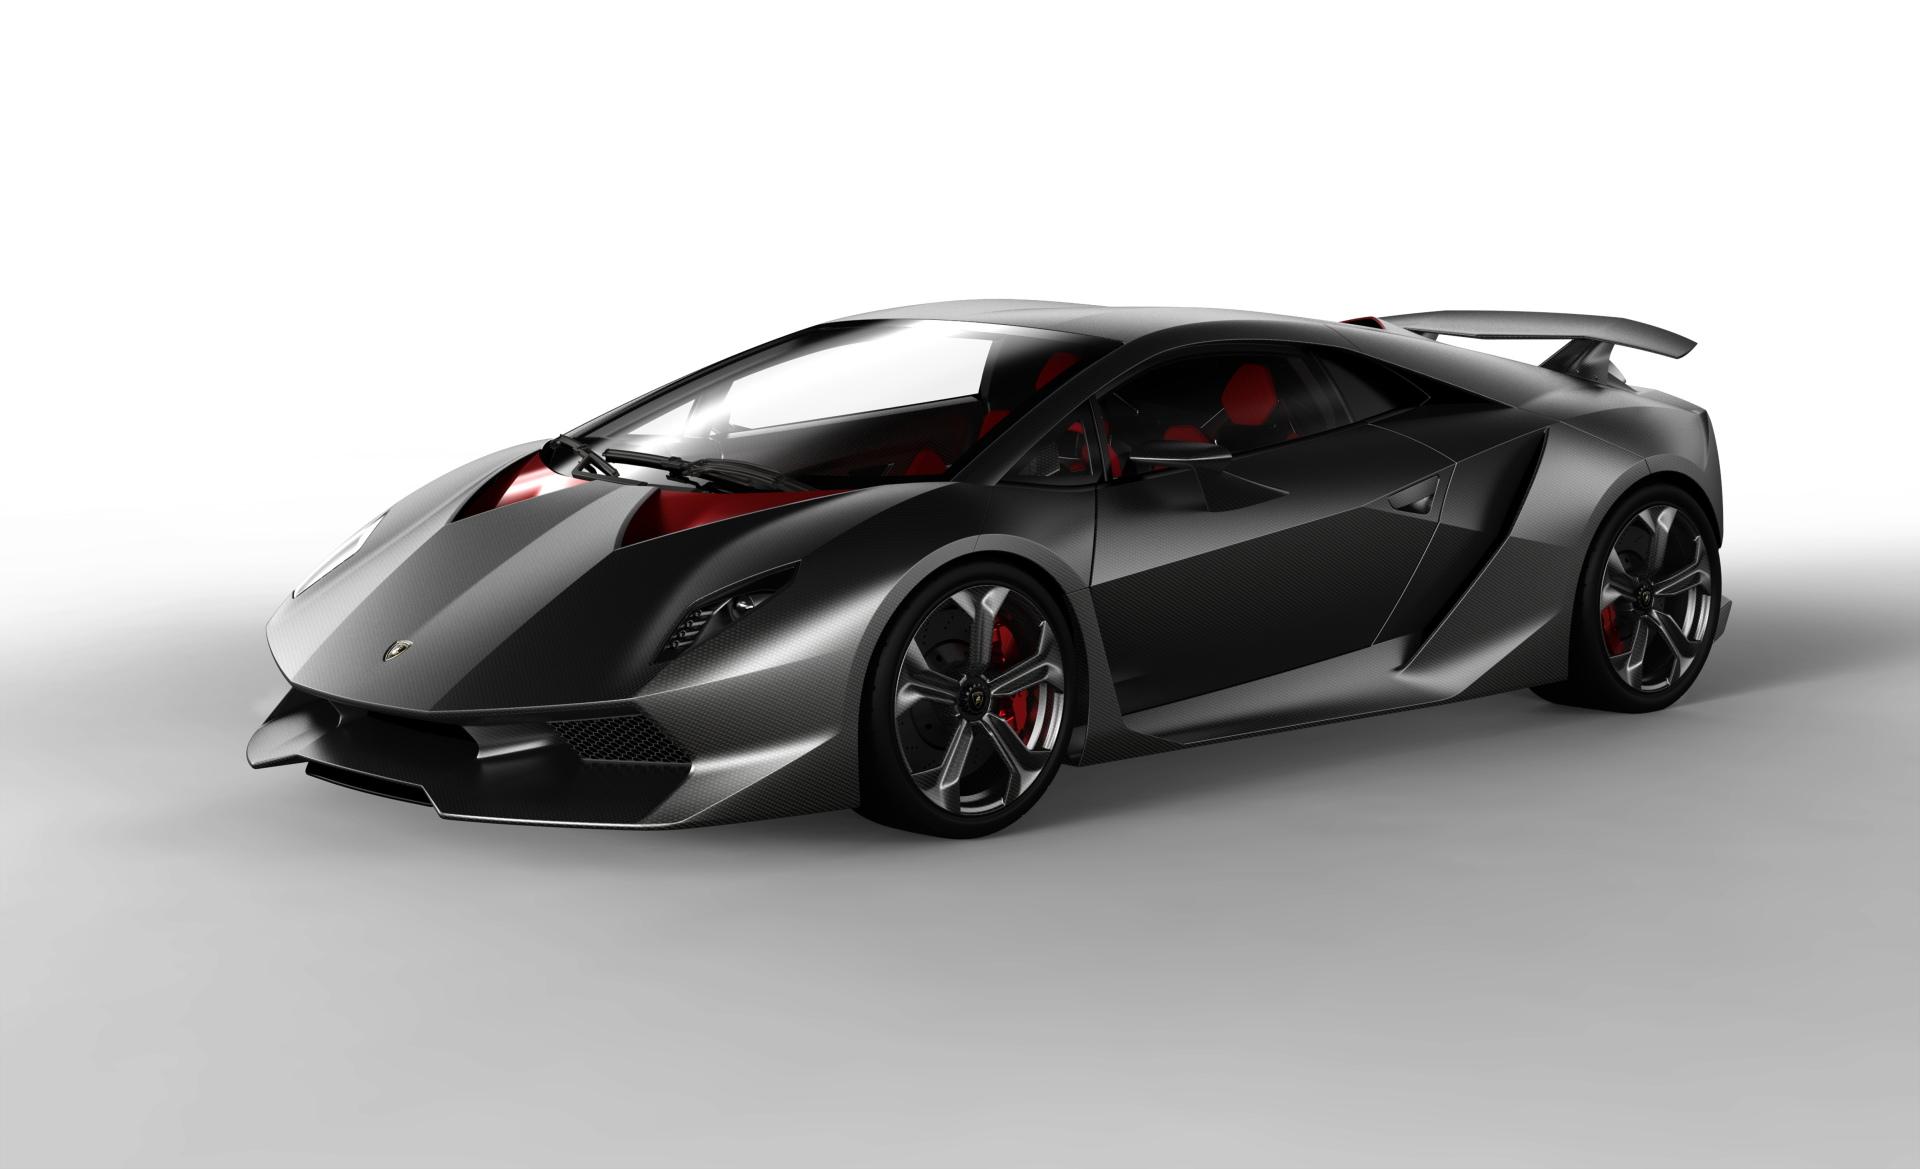 Lamborghini Sesto Elemento at 640 x 960 iPhone 4 size wallpapers HD quality